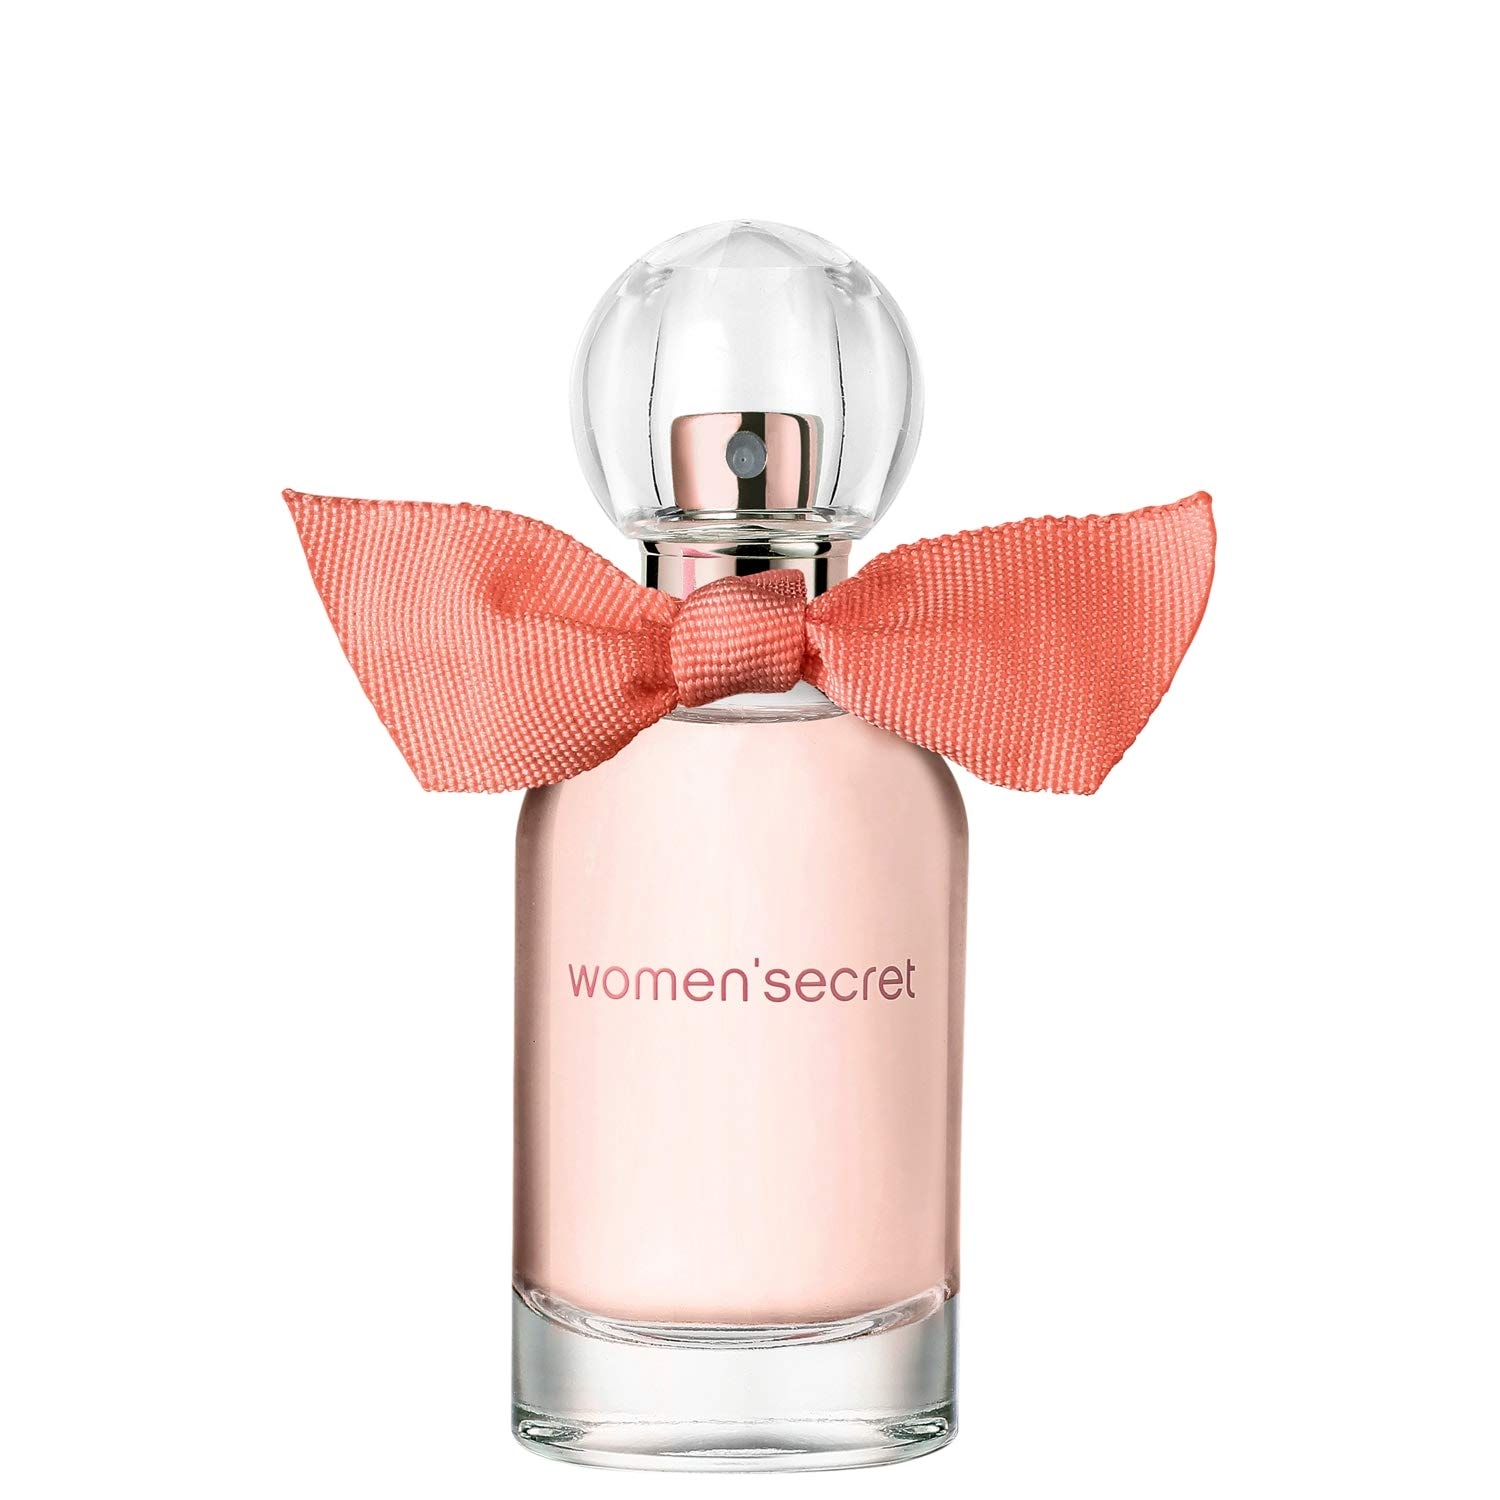 Women Secret, Eau My Secret, Fragrance, for Her, 1.0oz, 30ml, Eau de Toilette, EDT, Pour Femme, Spray, Made in Spain, by